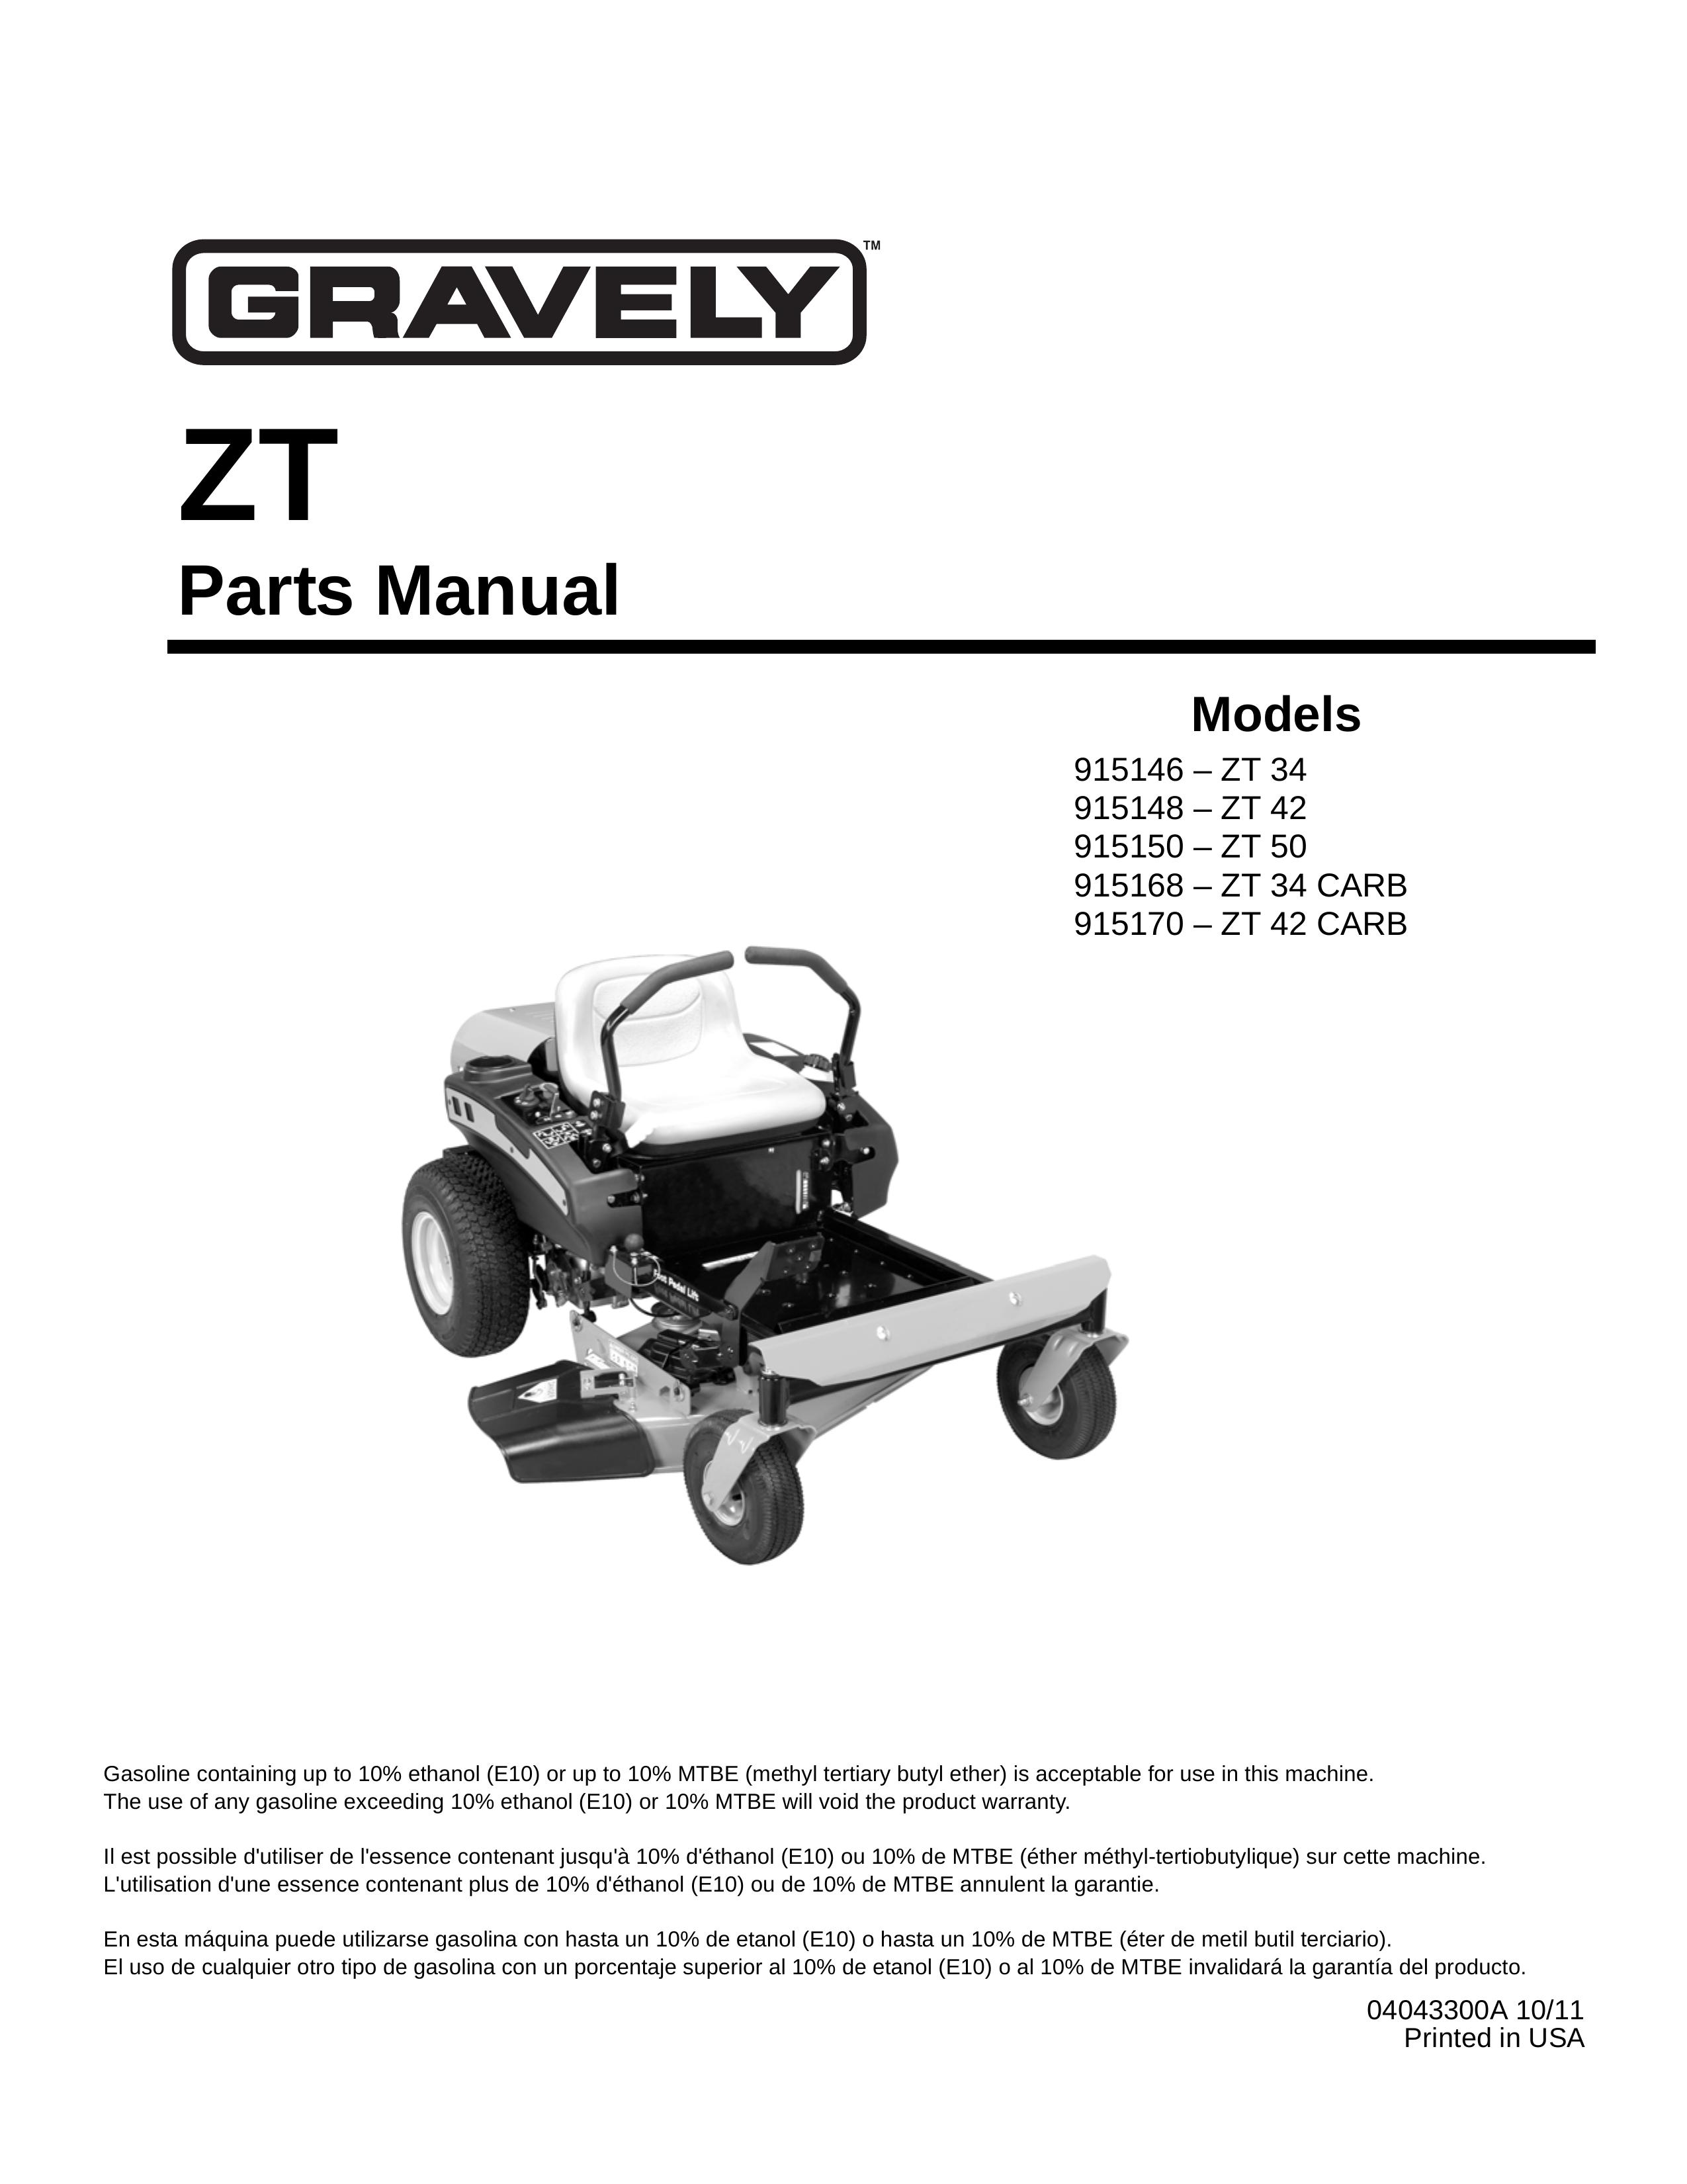 Gravely 915150 ZT 50 Lawn Mower User Manual